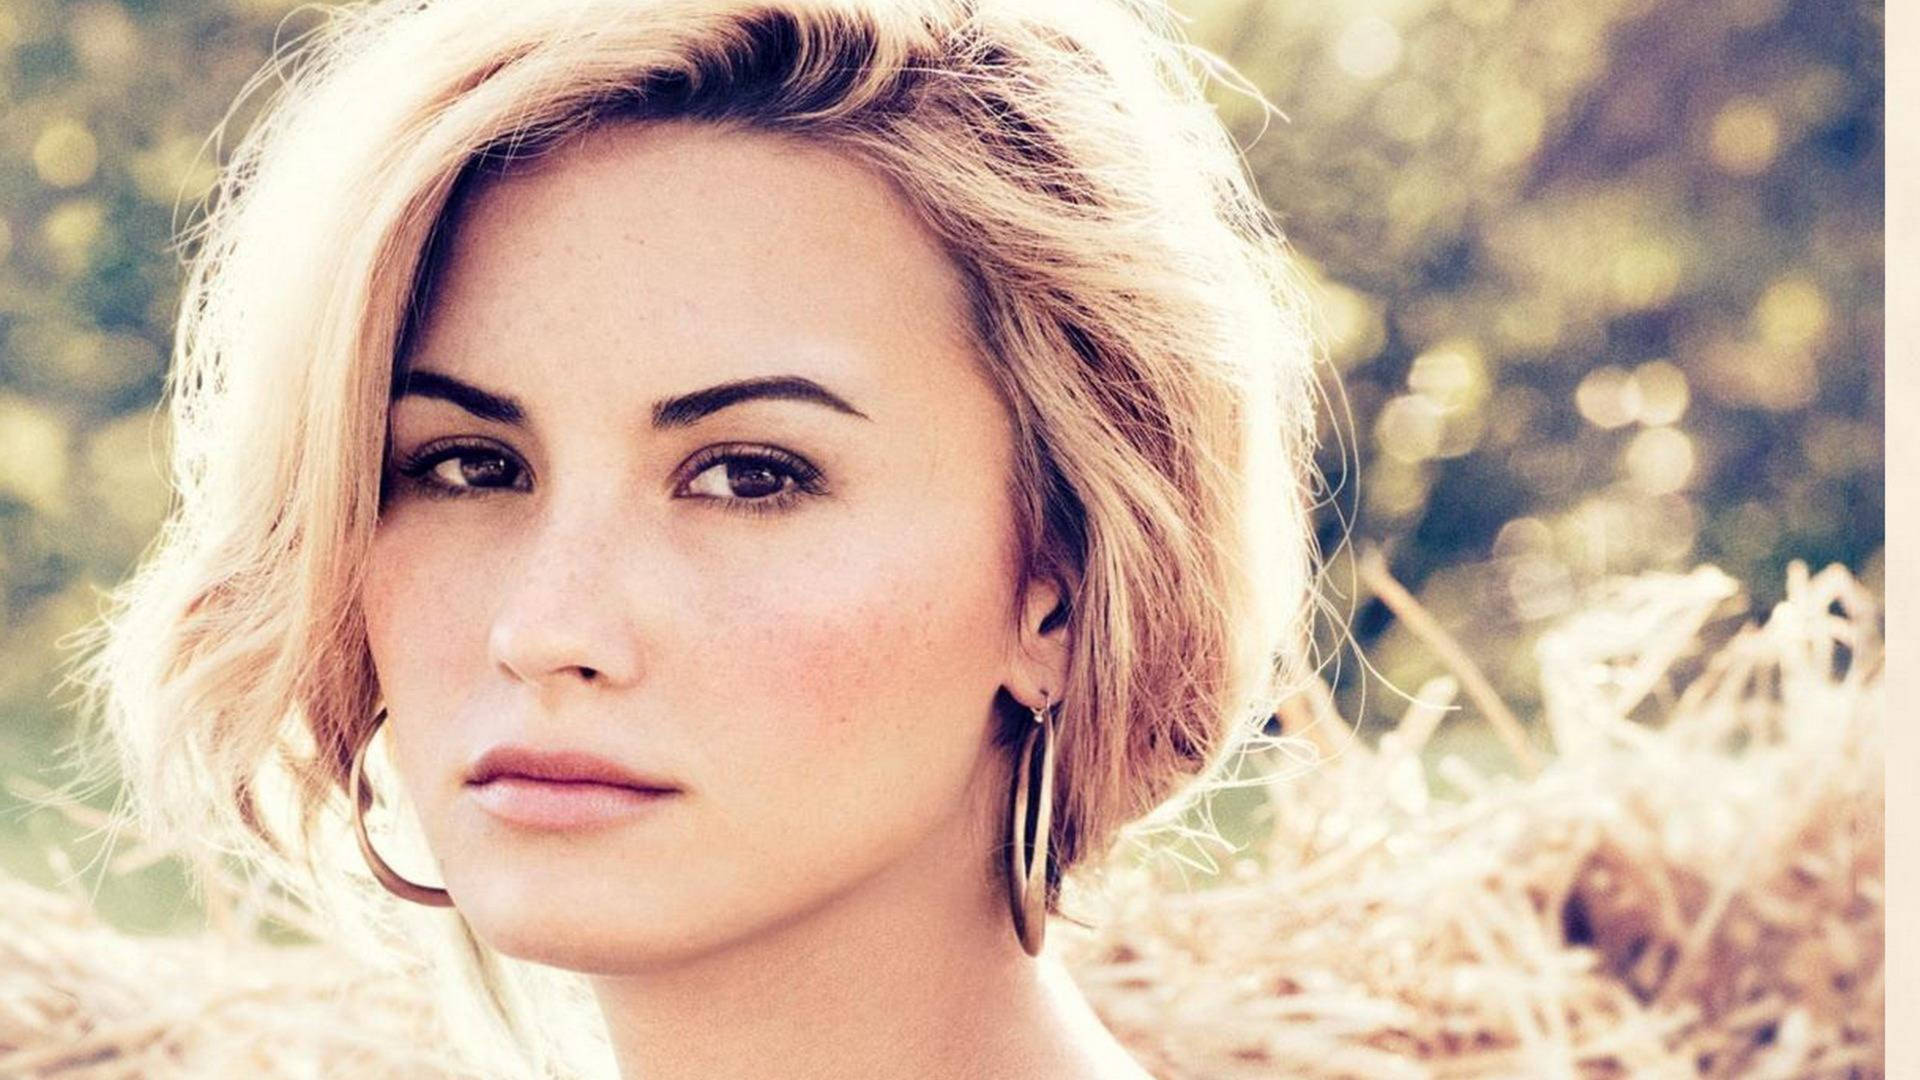 Aesthetic Photography Of Demi Lovato Wallpaper